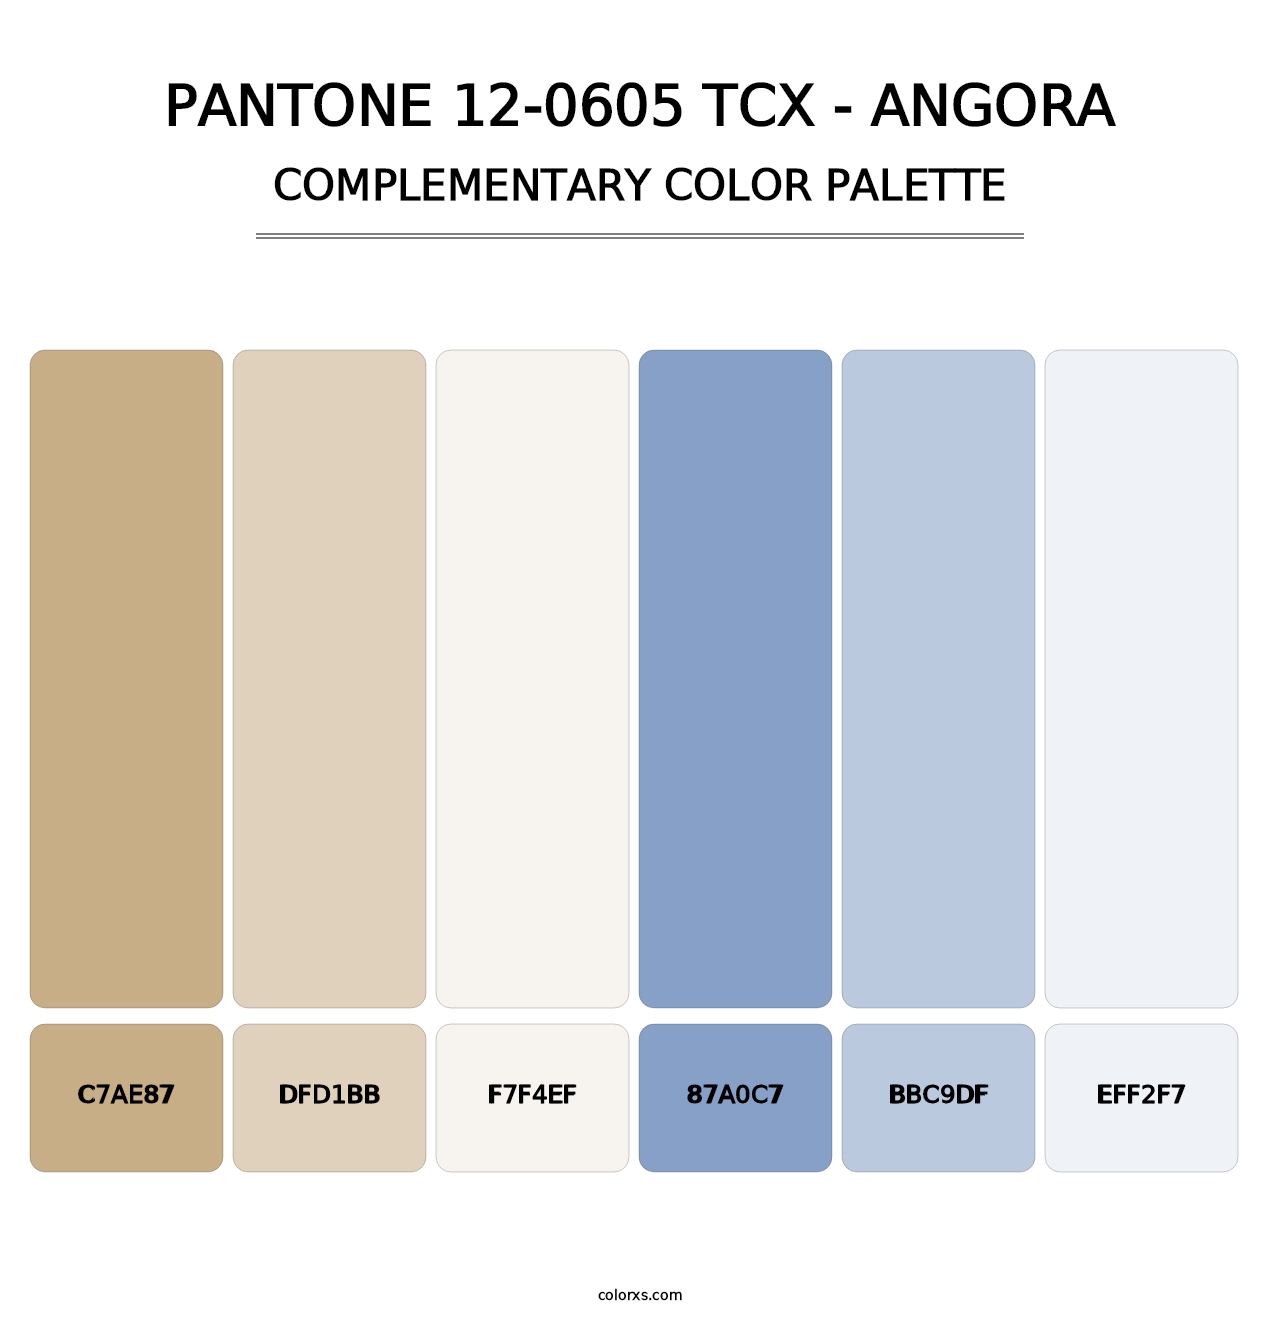 PANTONE 12-0605 TCX - Angora - Complementary Color Palette